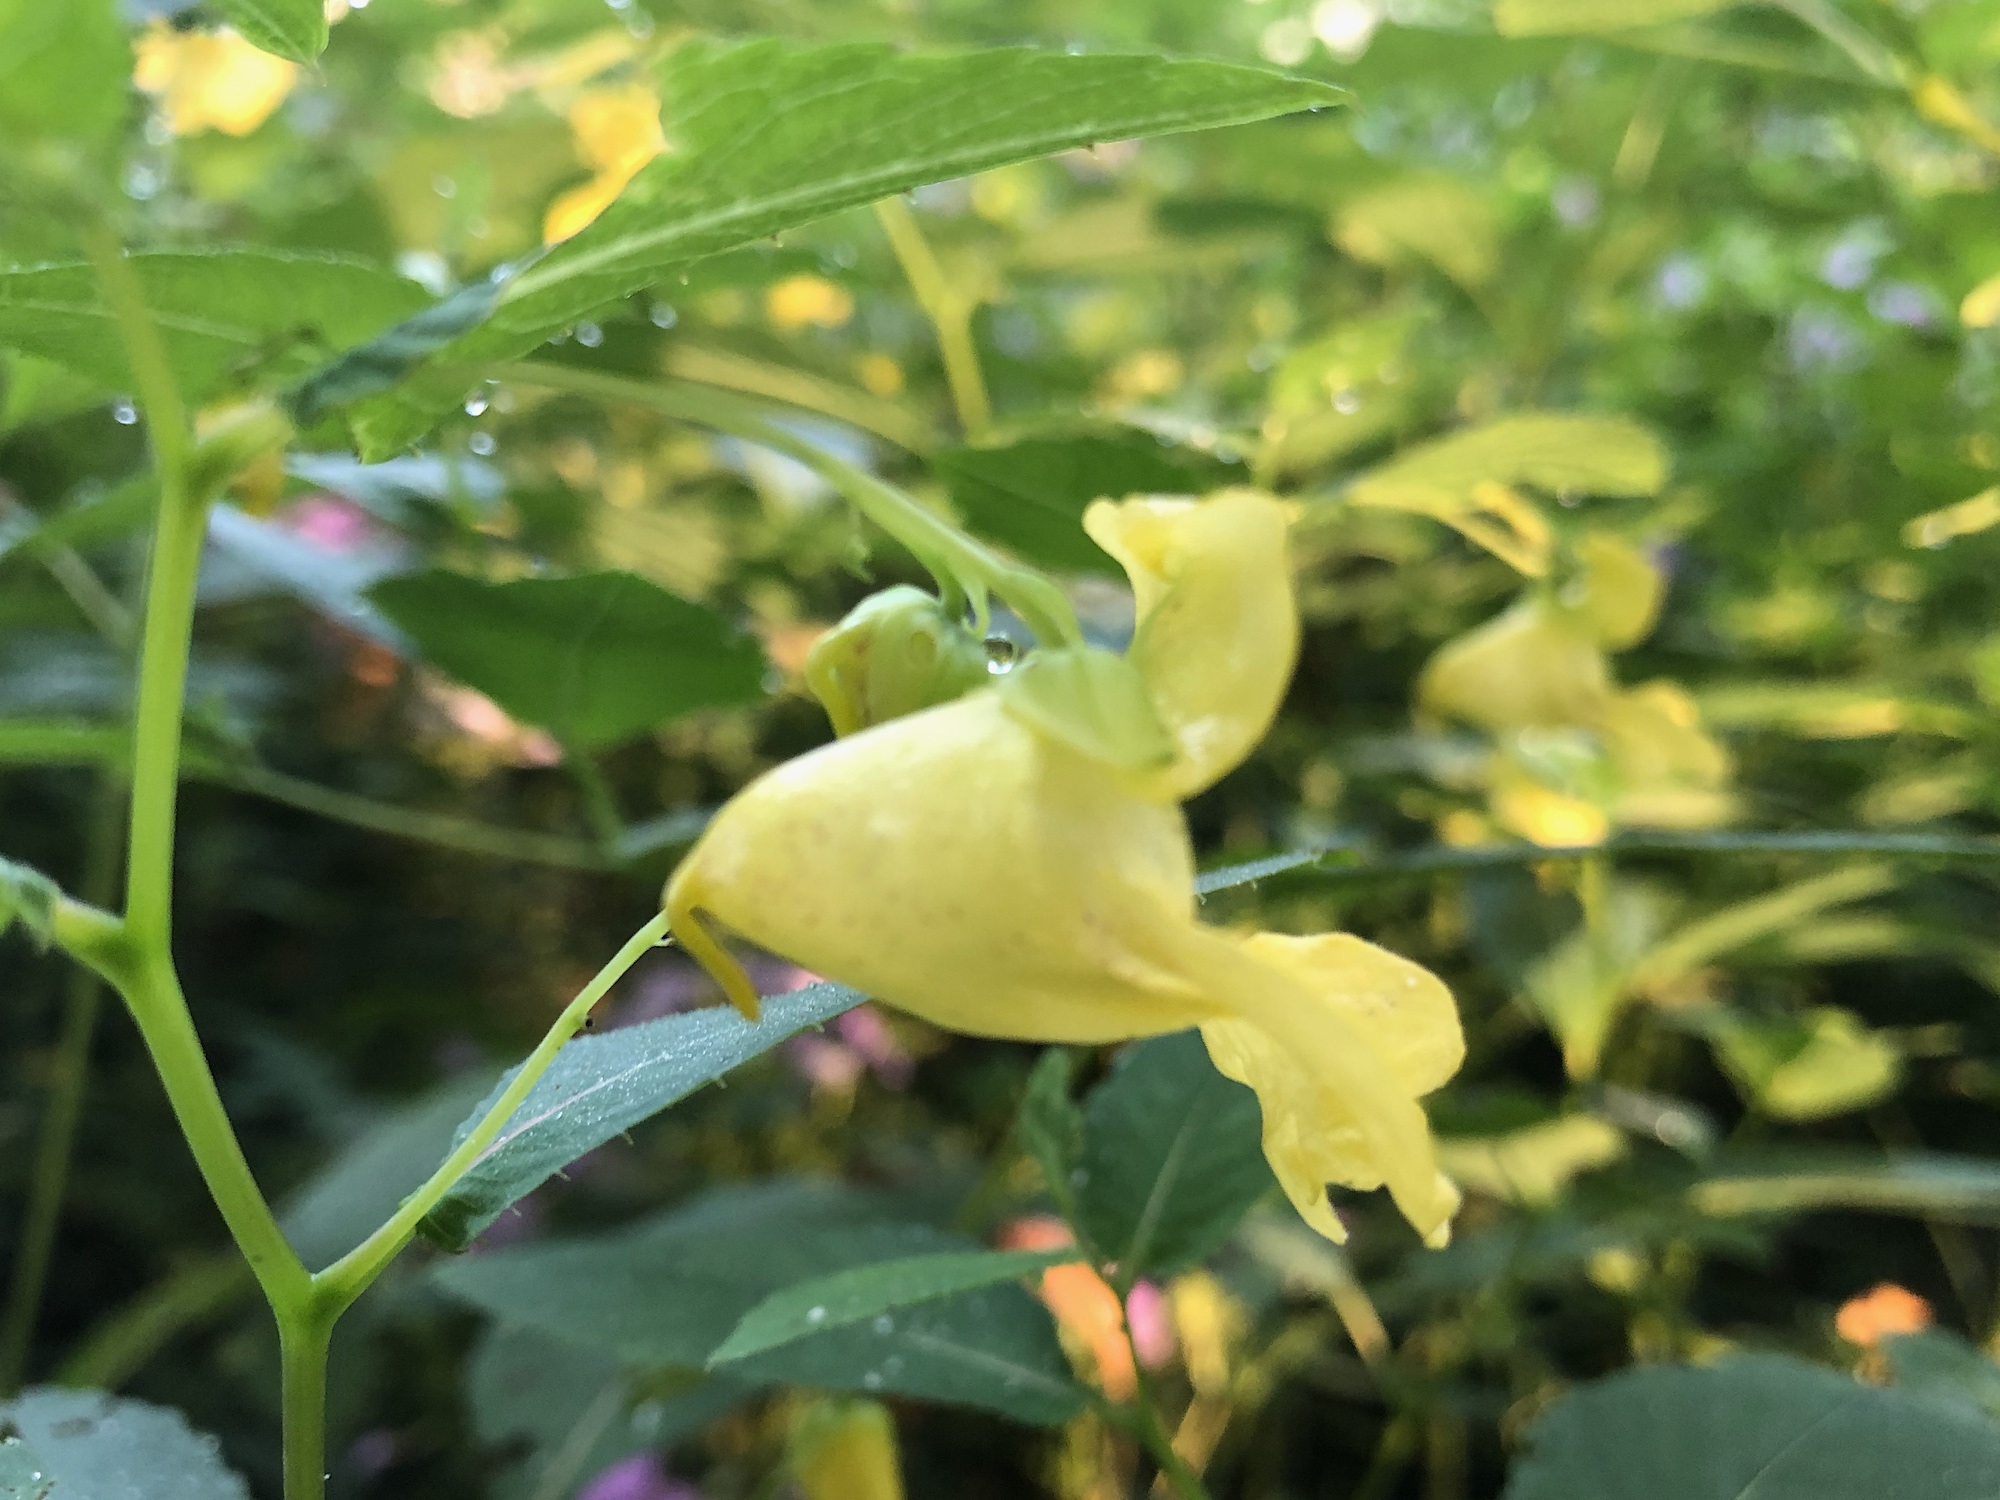 Yellow Jewelweed in the Oak Savanna on August 24, 2019.